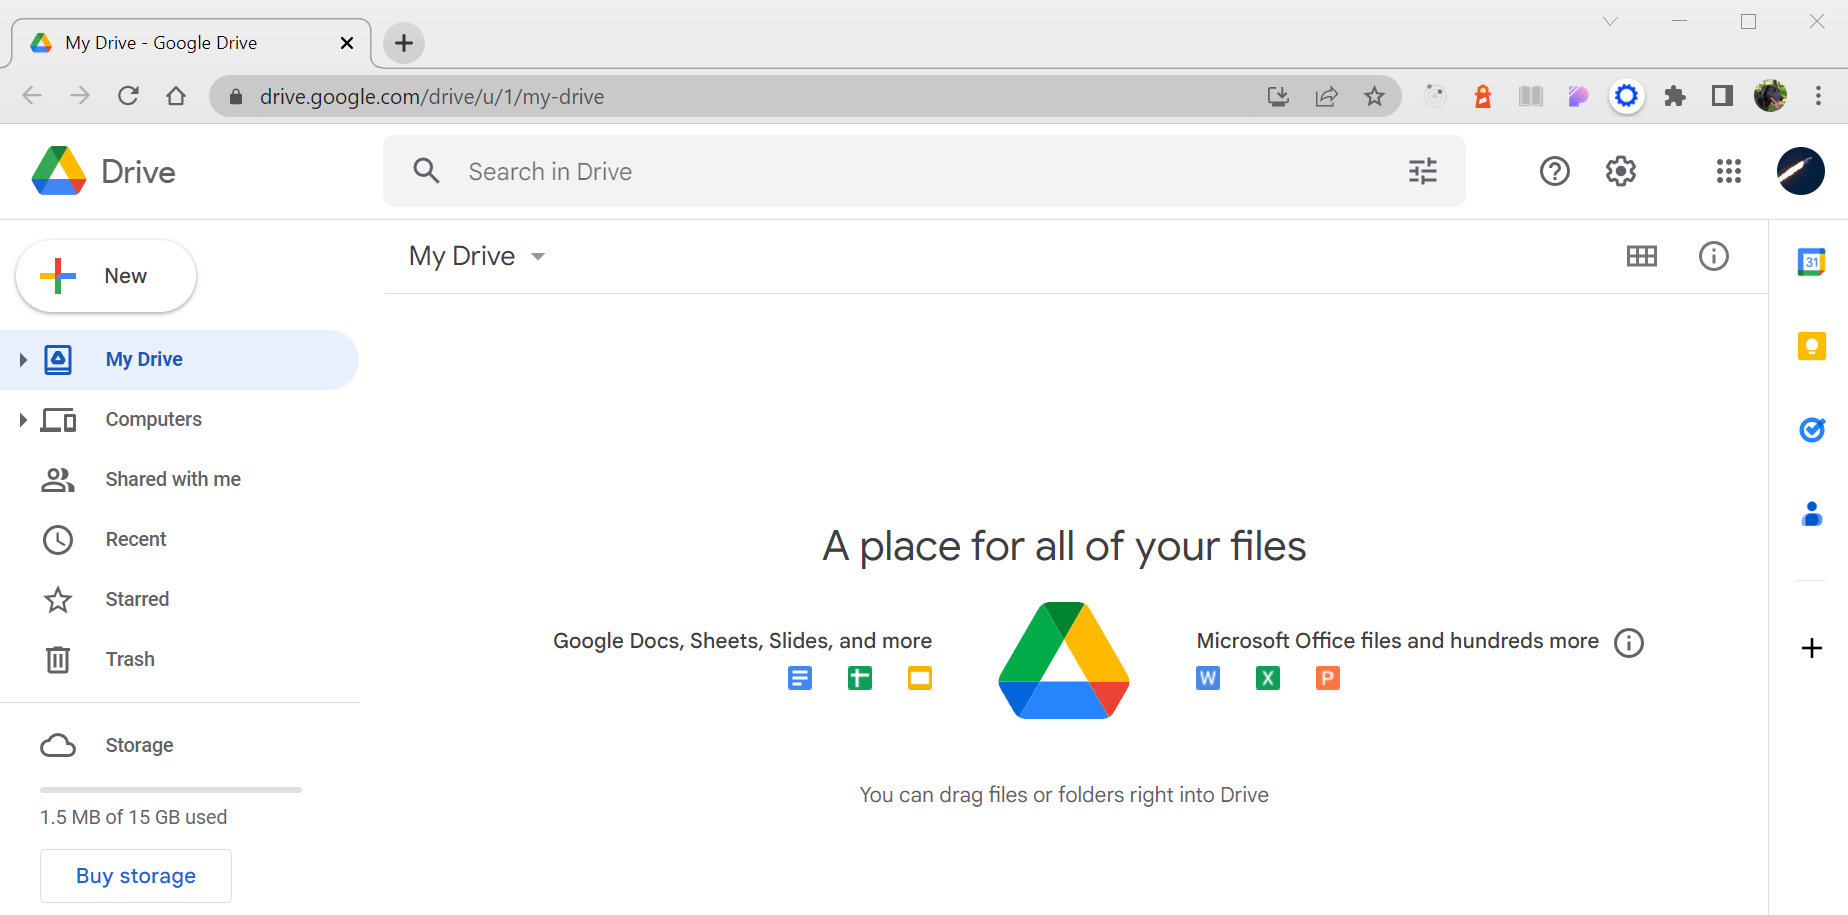 A blank Google Drive environment